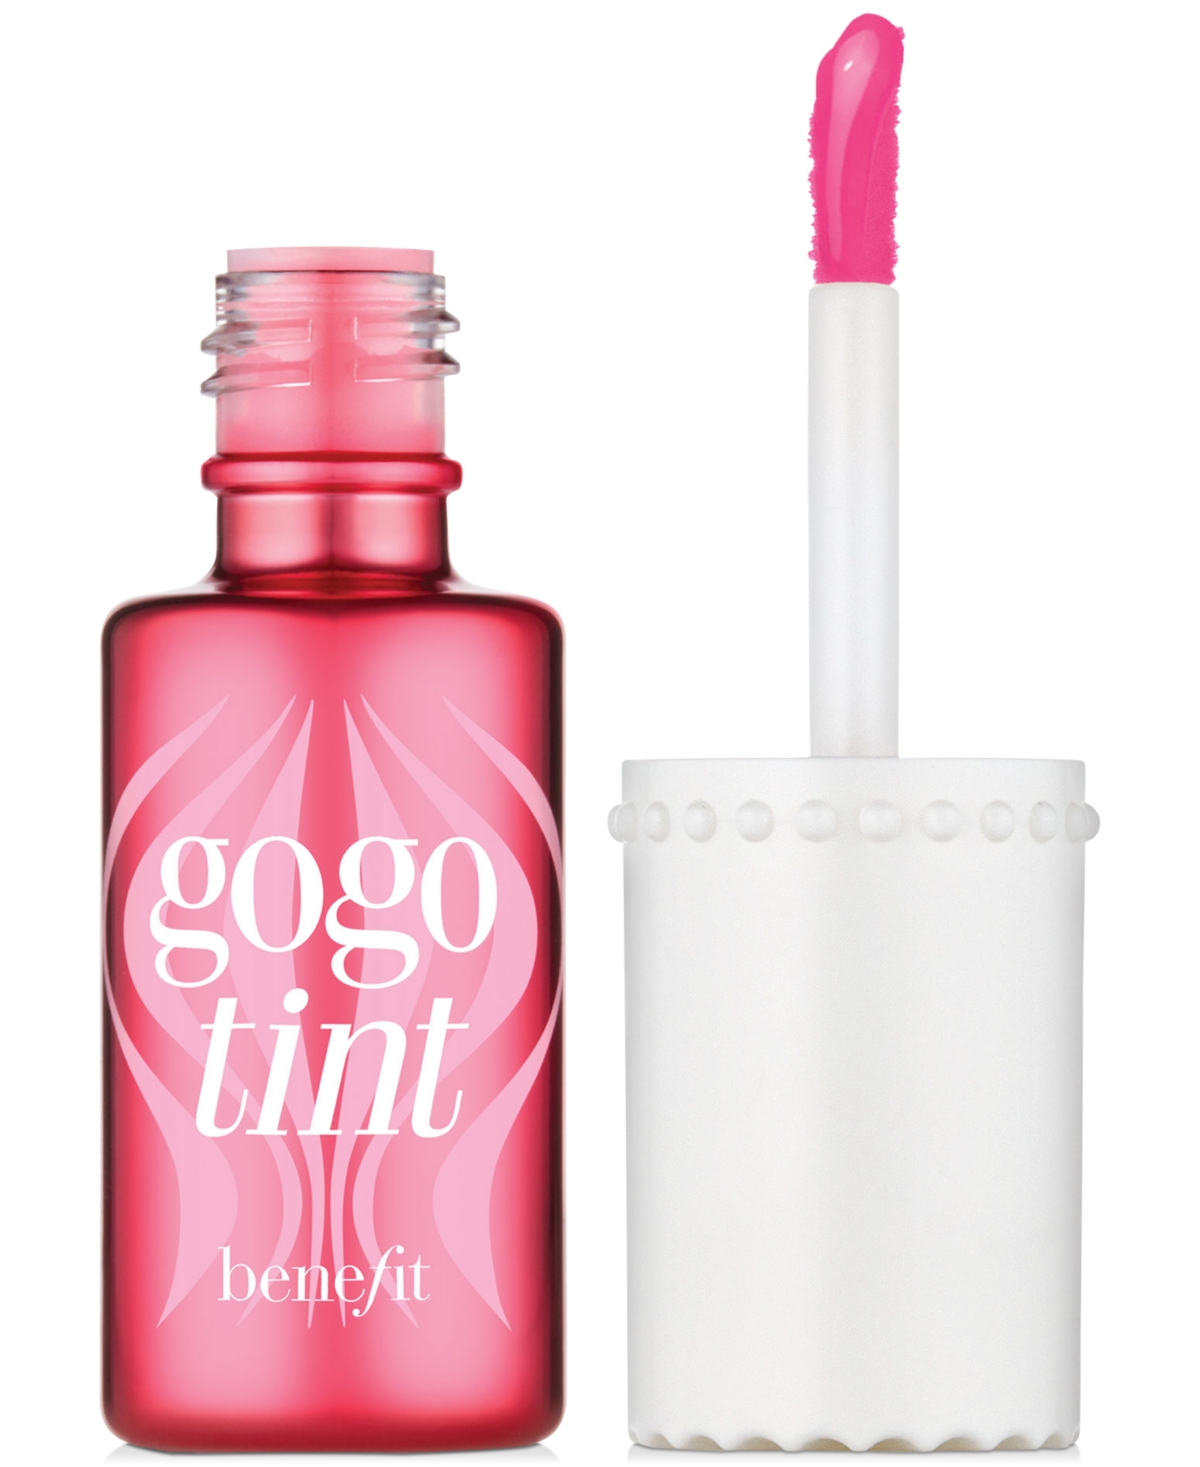 Benefit Cosmetics Liquid Lip Blush & Cheek Tint, 0.2 oz In Gogotint - Bright Cherry-tinted